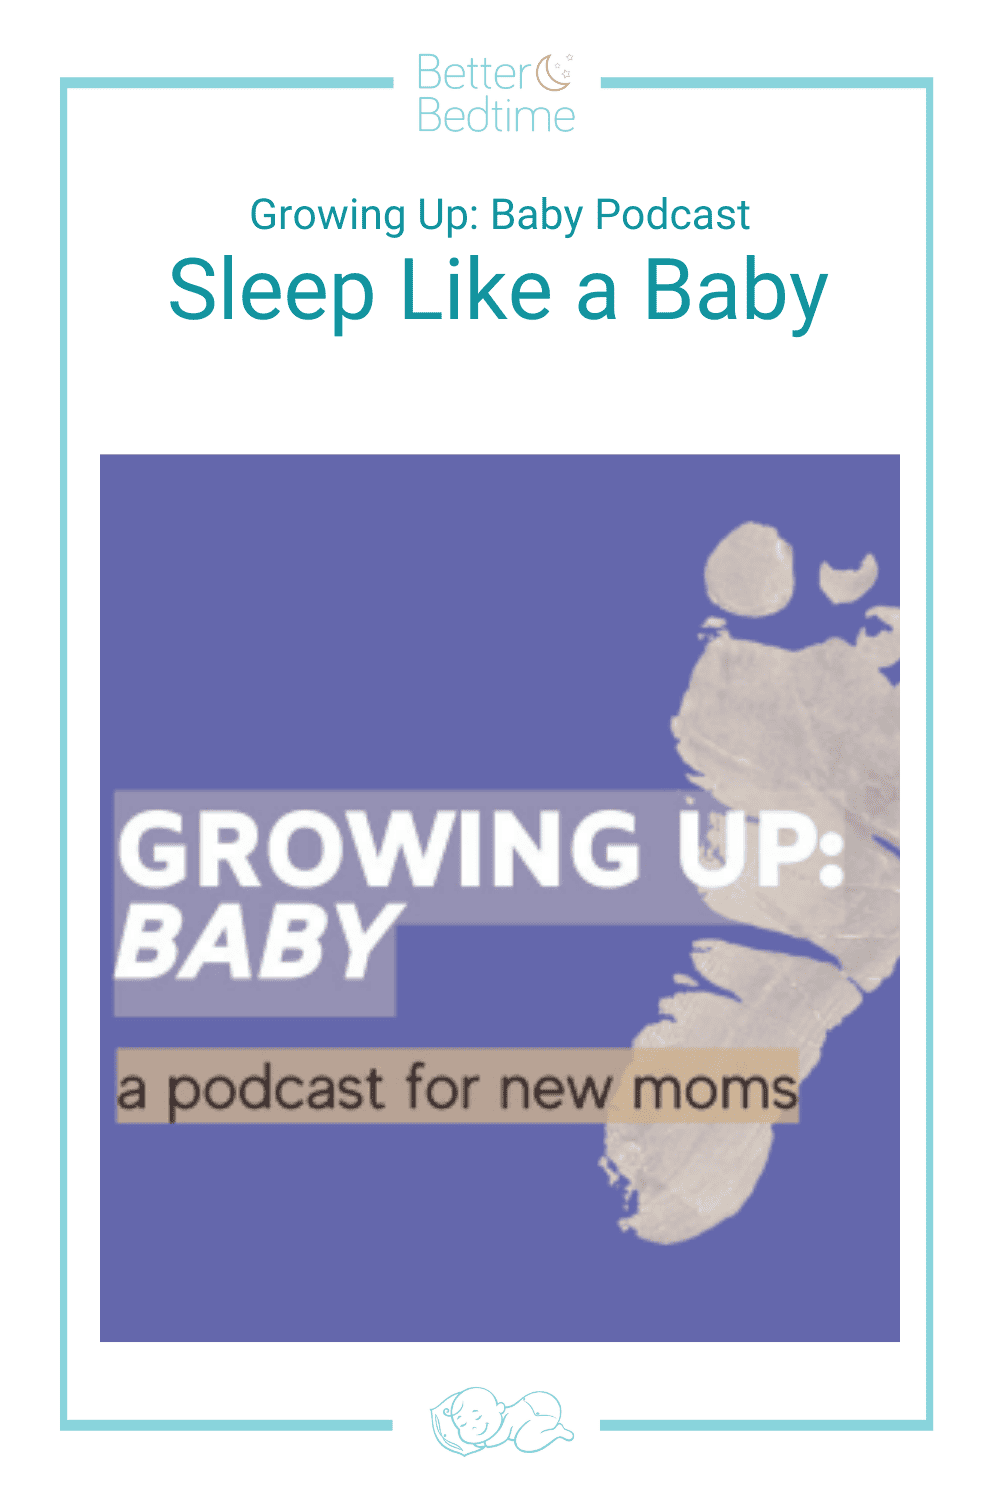 Sleep Like a Baby: Growing Up Baby Podcast